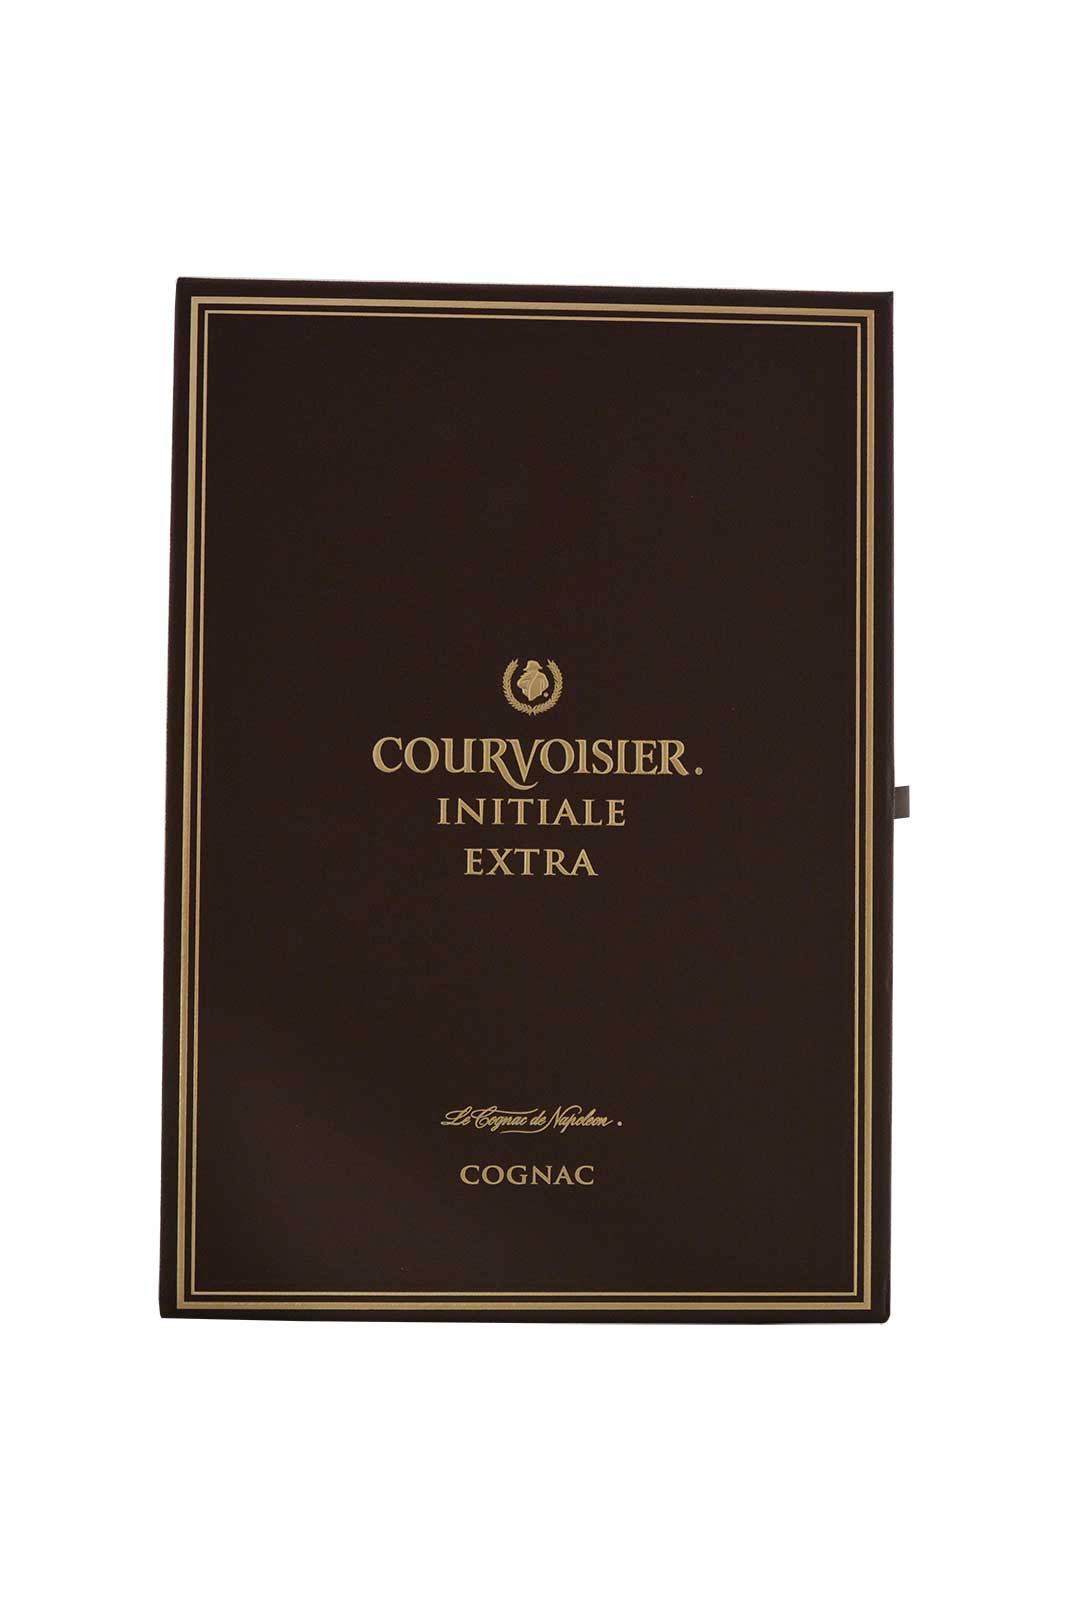 Courvoisier Initiale Extra